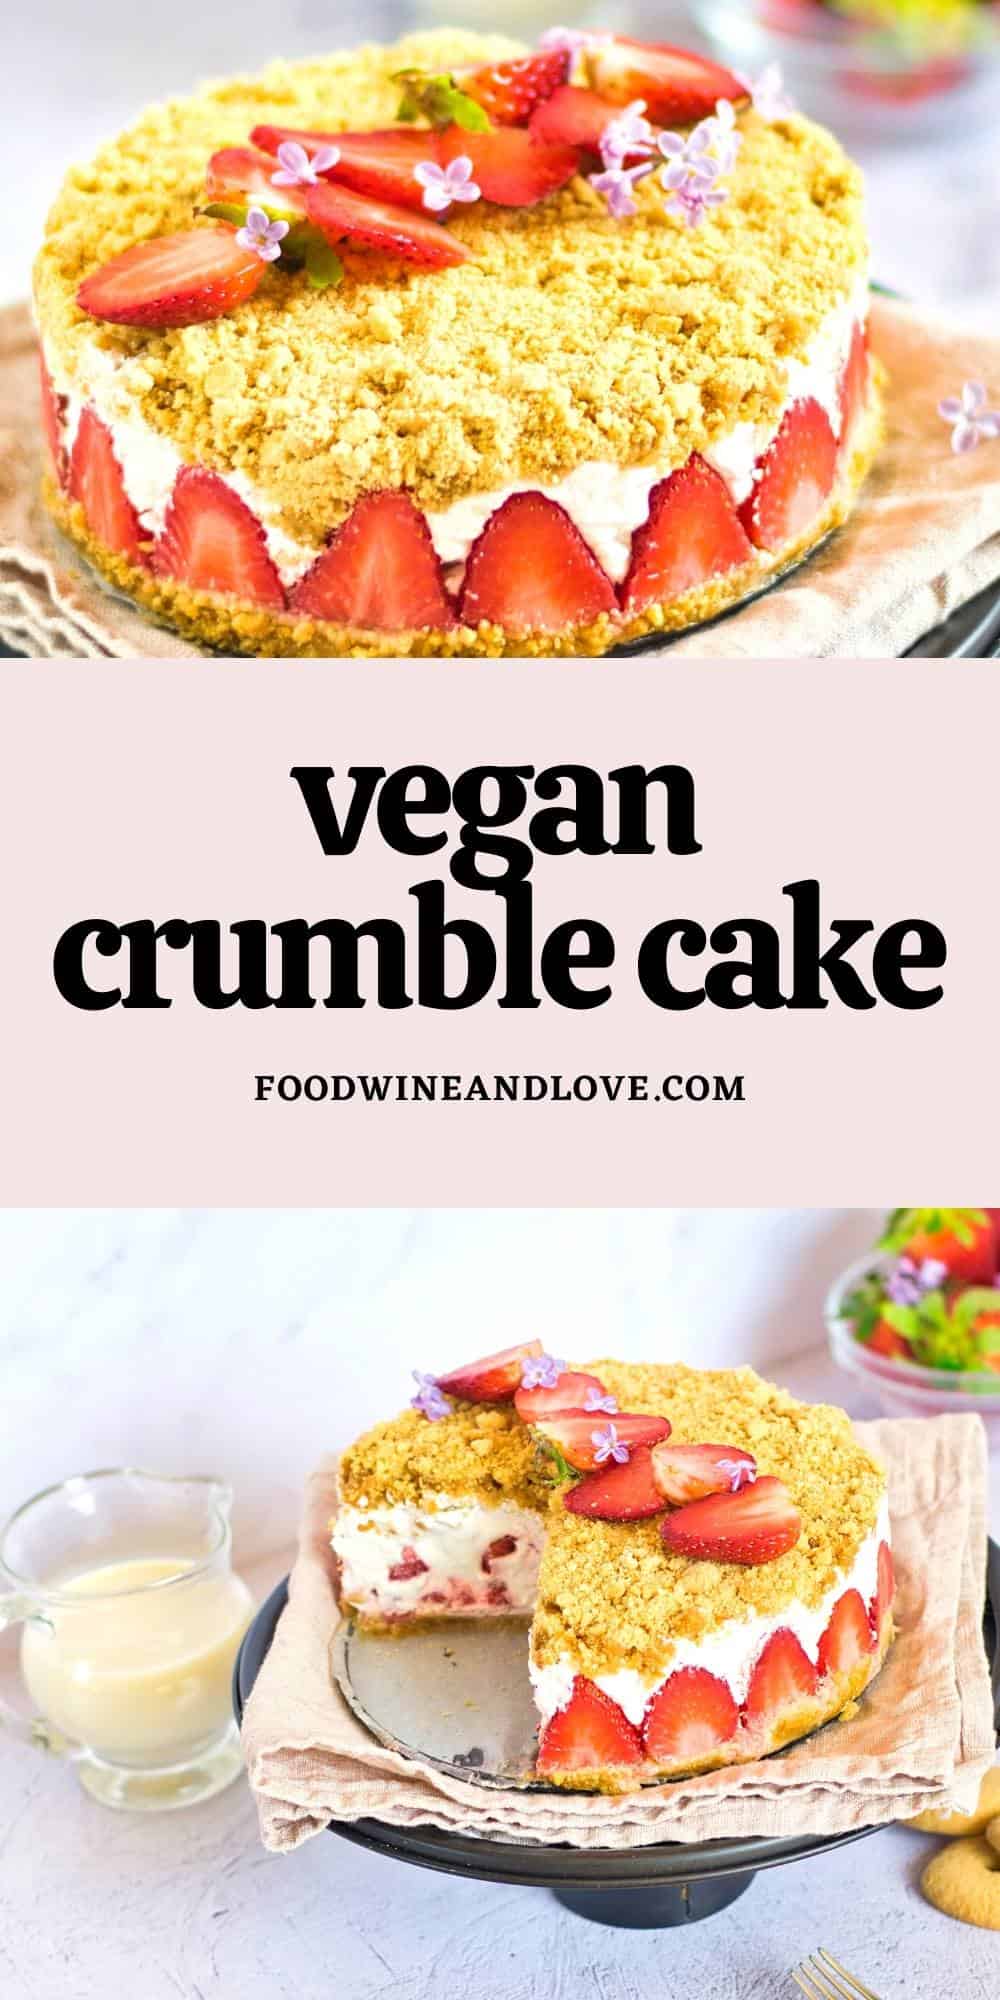 Vegan Strawberry Crumble Cake